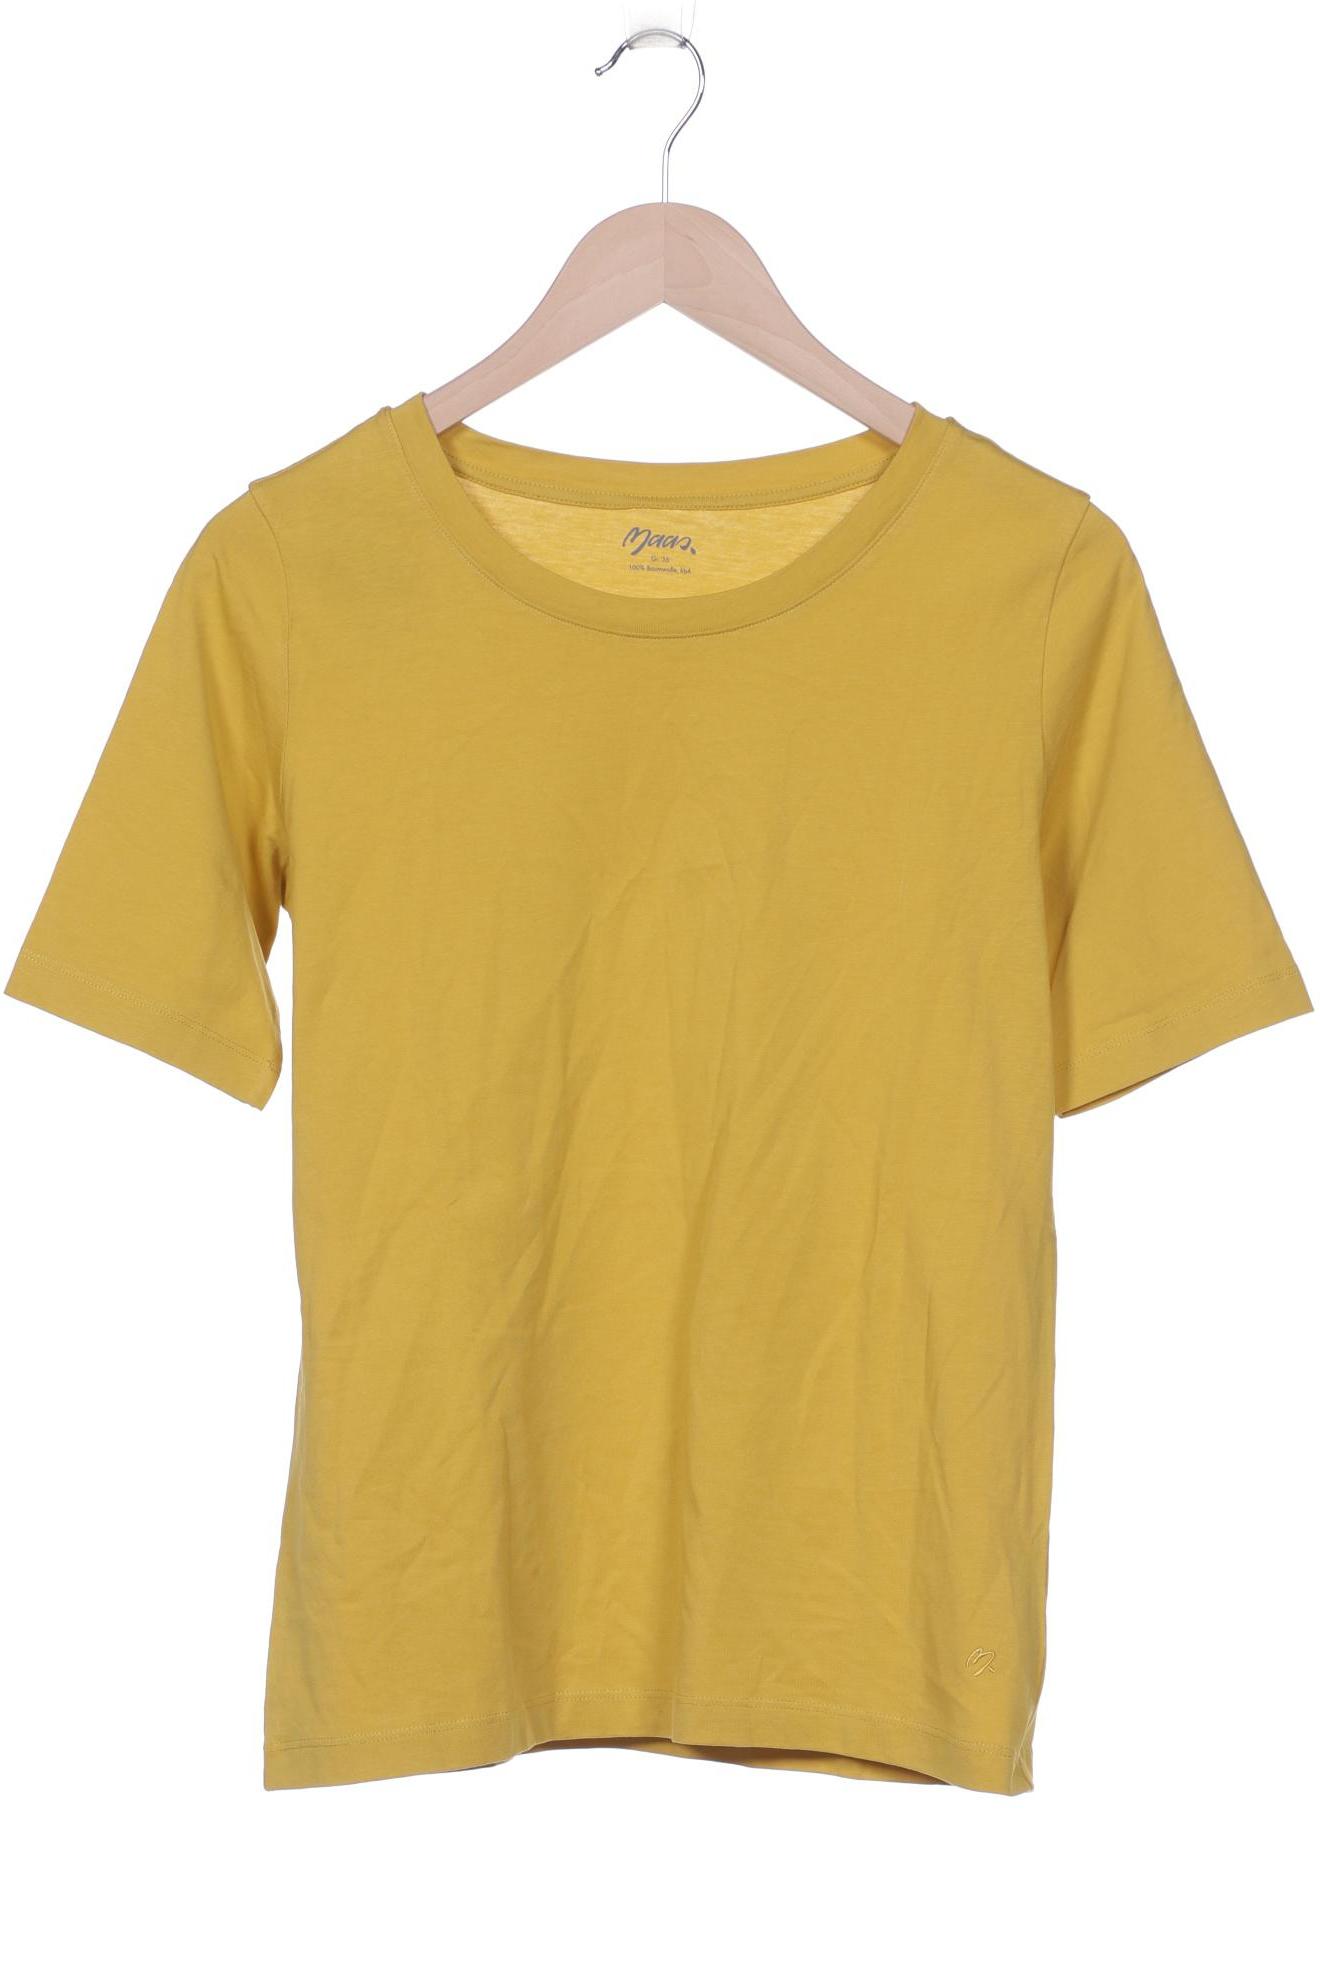 Maas Damen T-Shirt, gelb, Gr. 36 von Maas